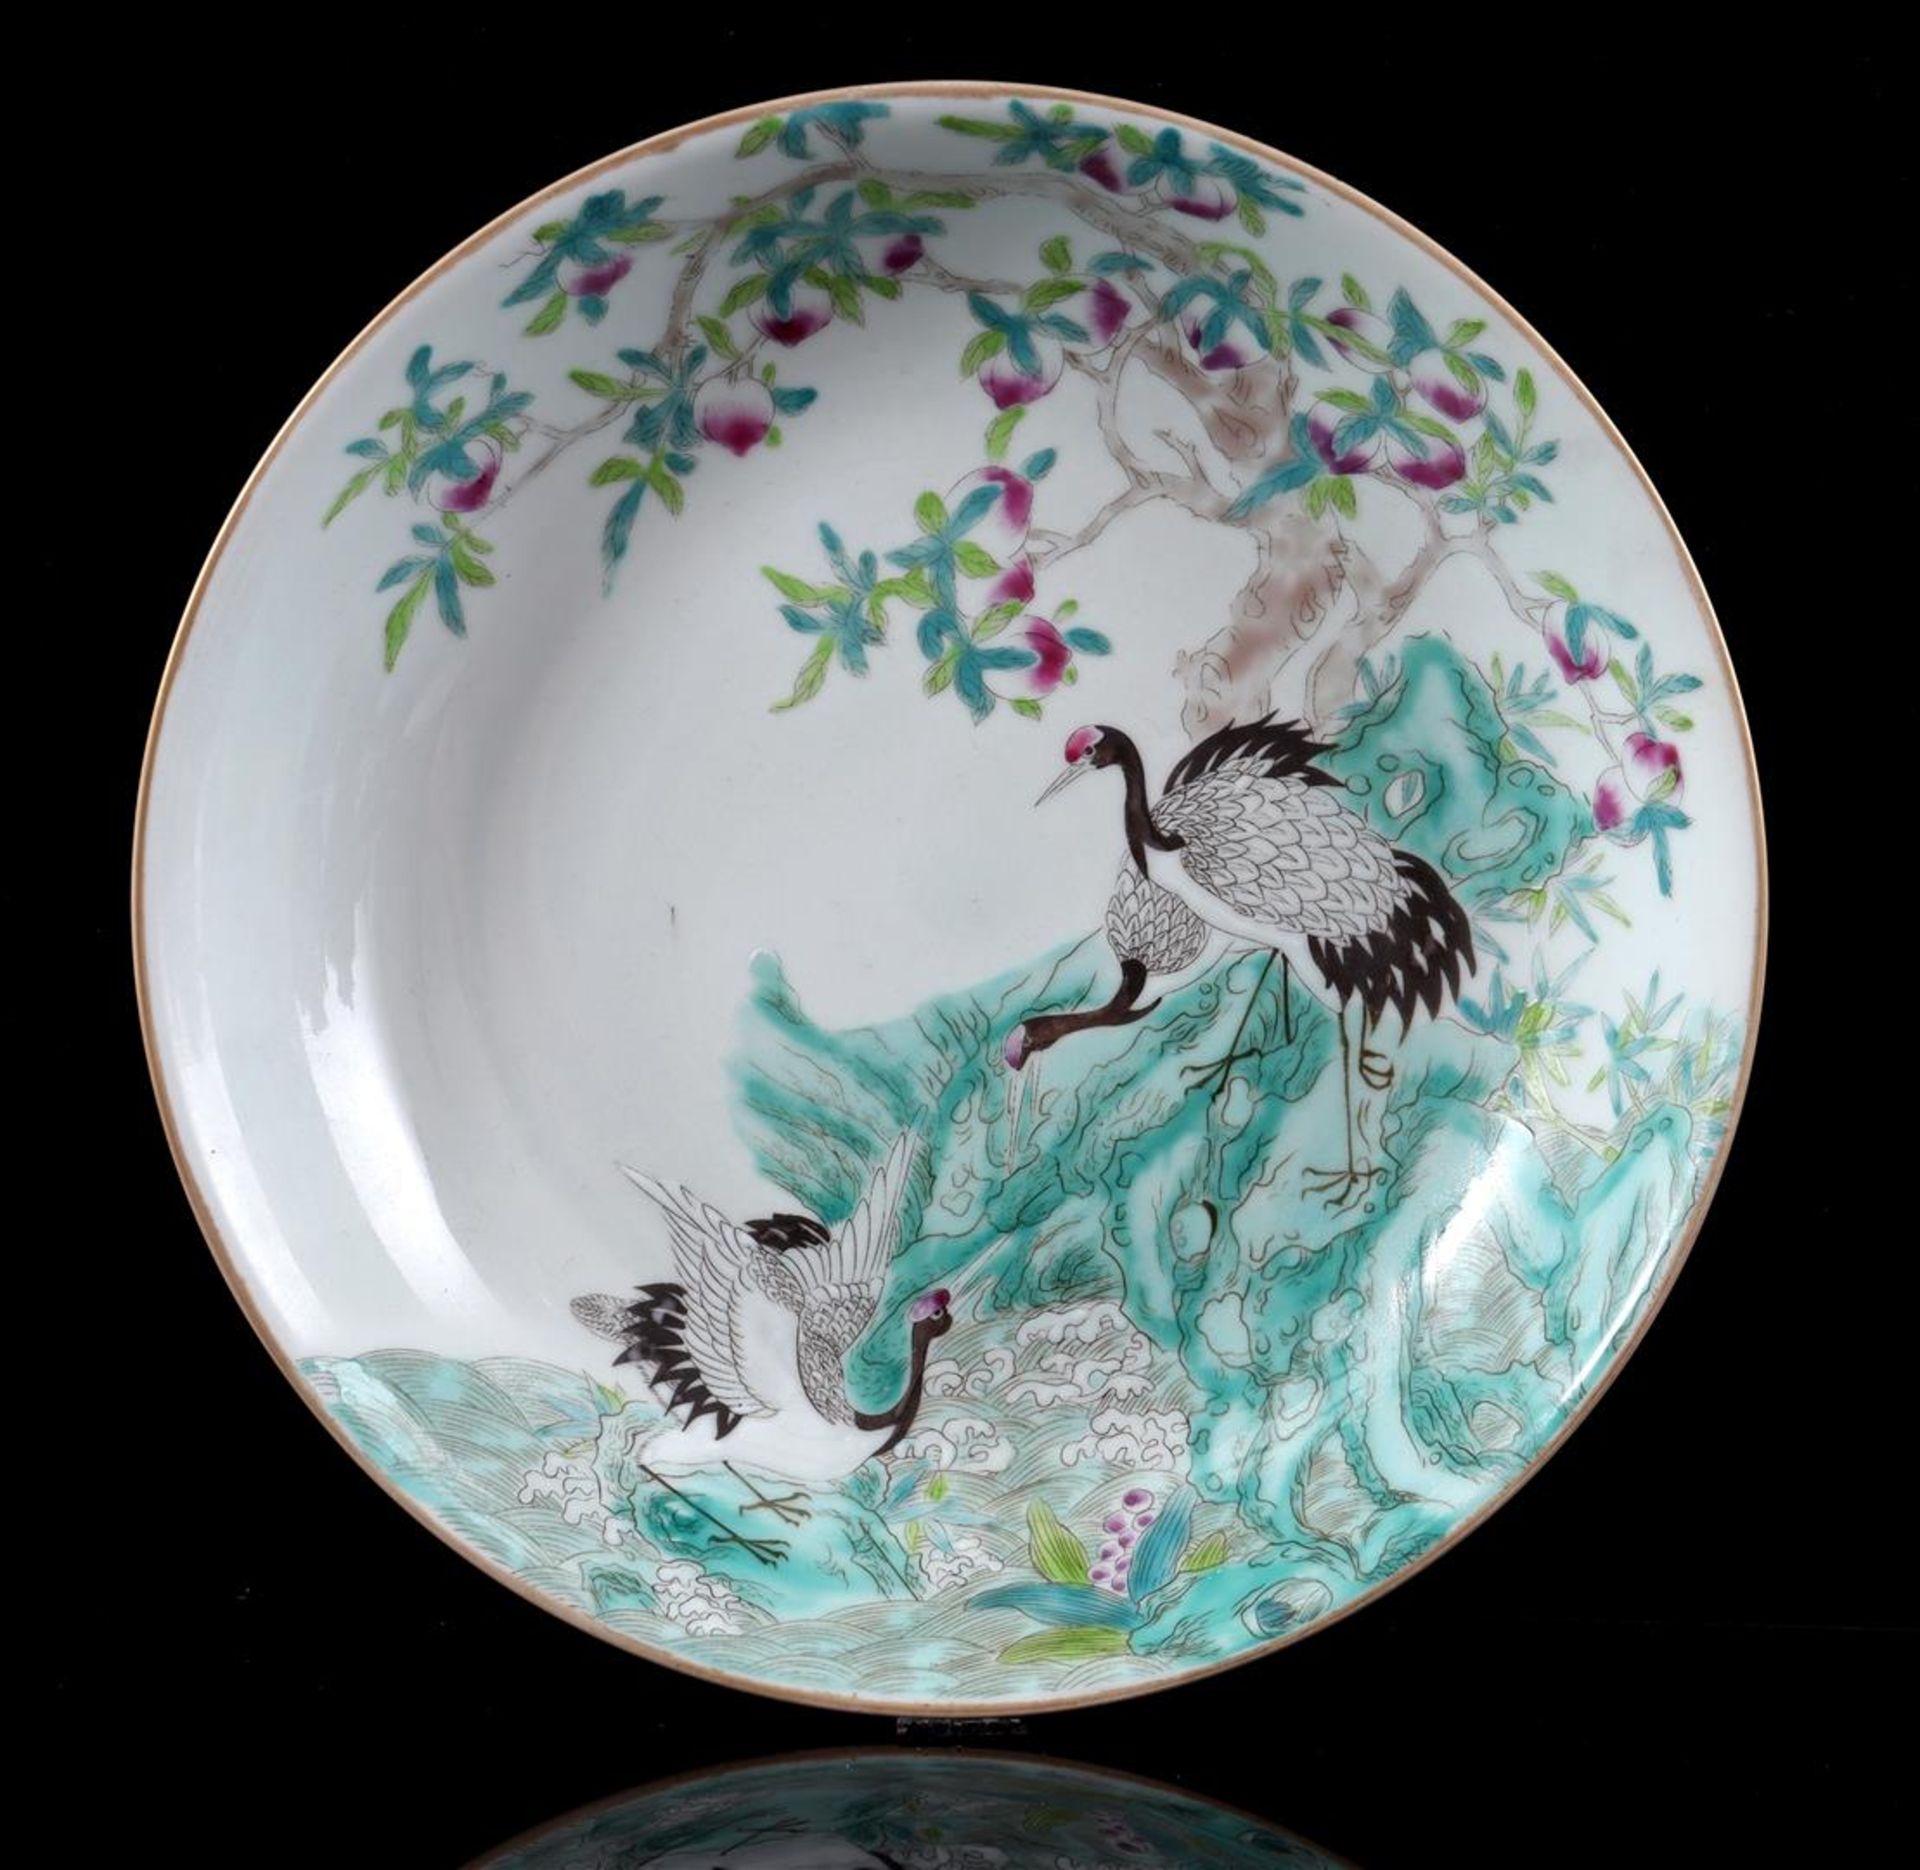 Porcelain dish with decor of cranes